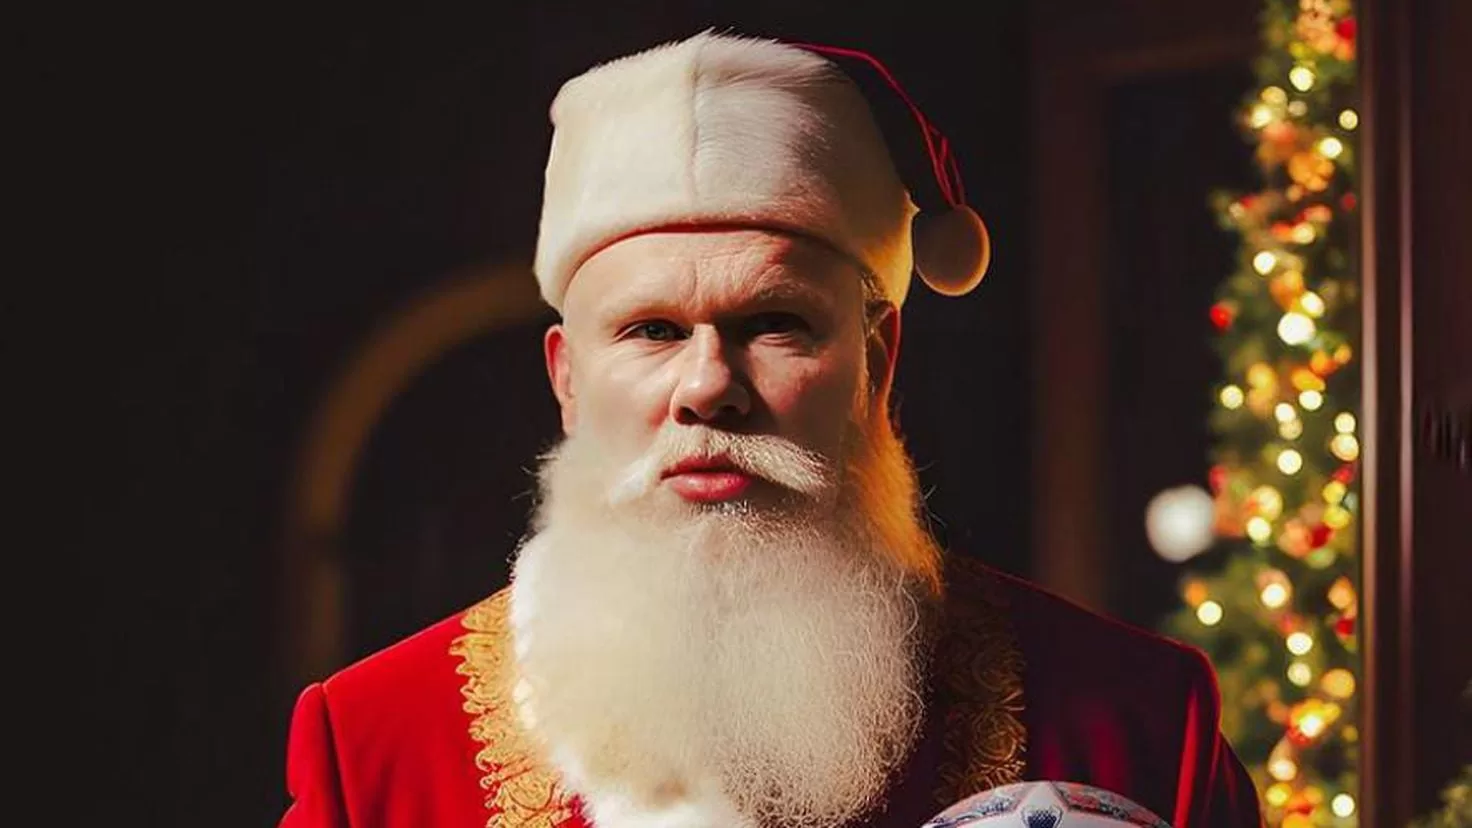 Haaland dresses up as Santa Claus to congratulate Christmas
